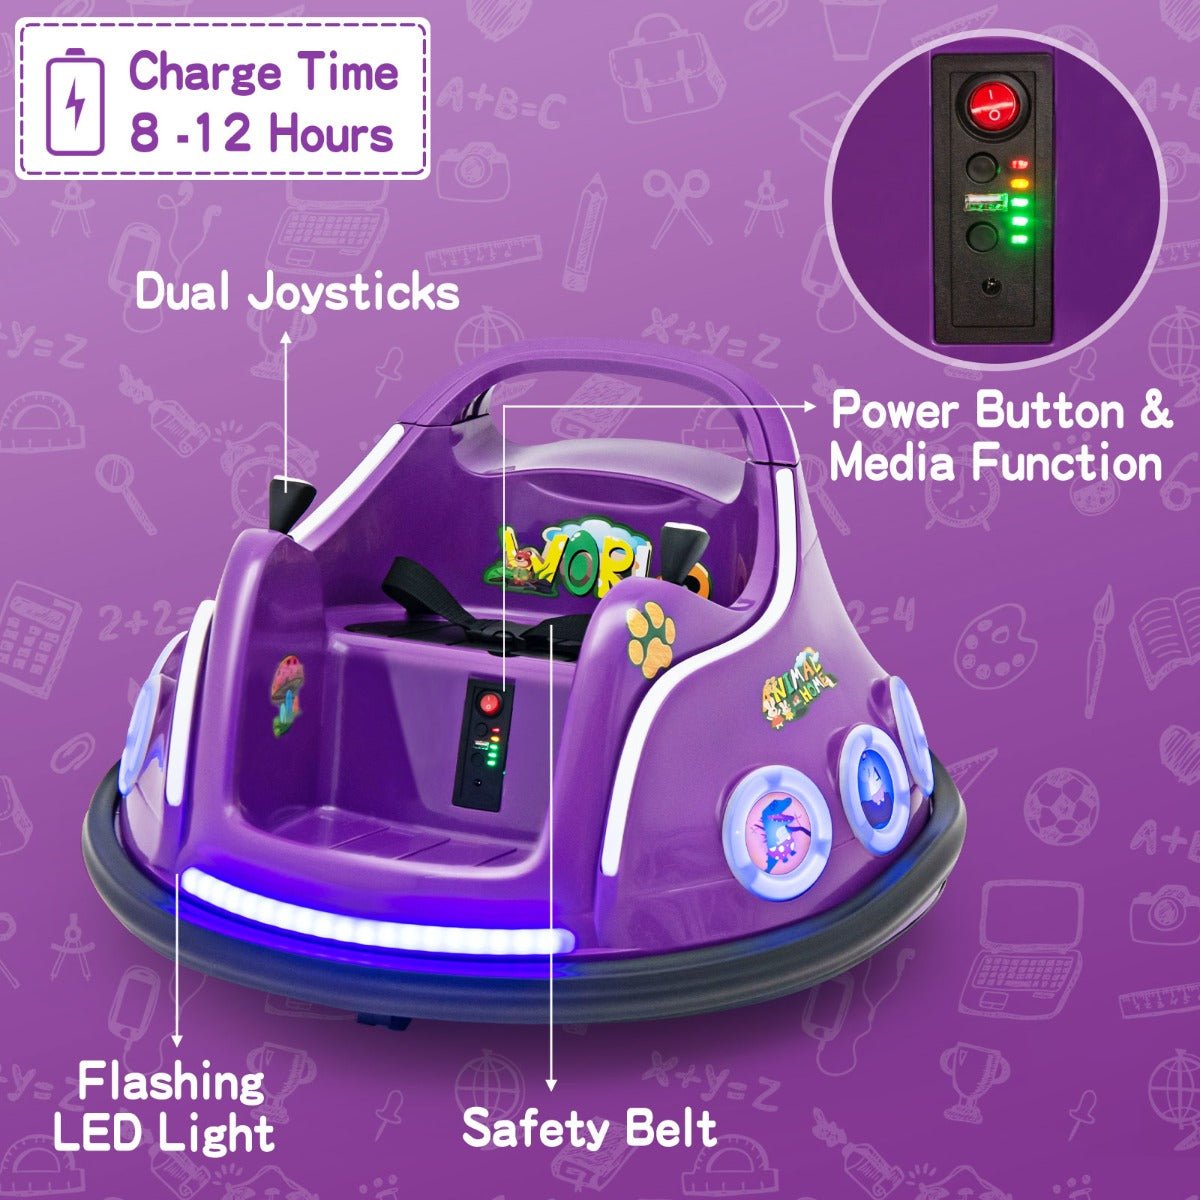 Buy the Purple Electric Bumper Car - Thrills Await